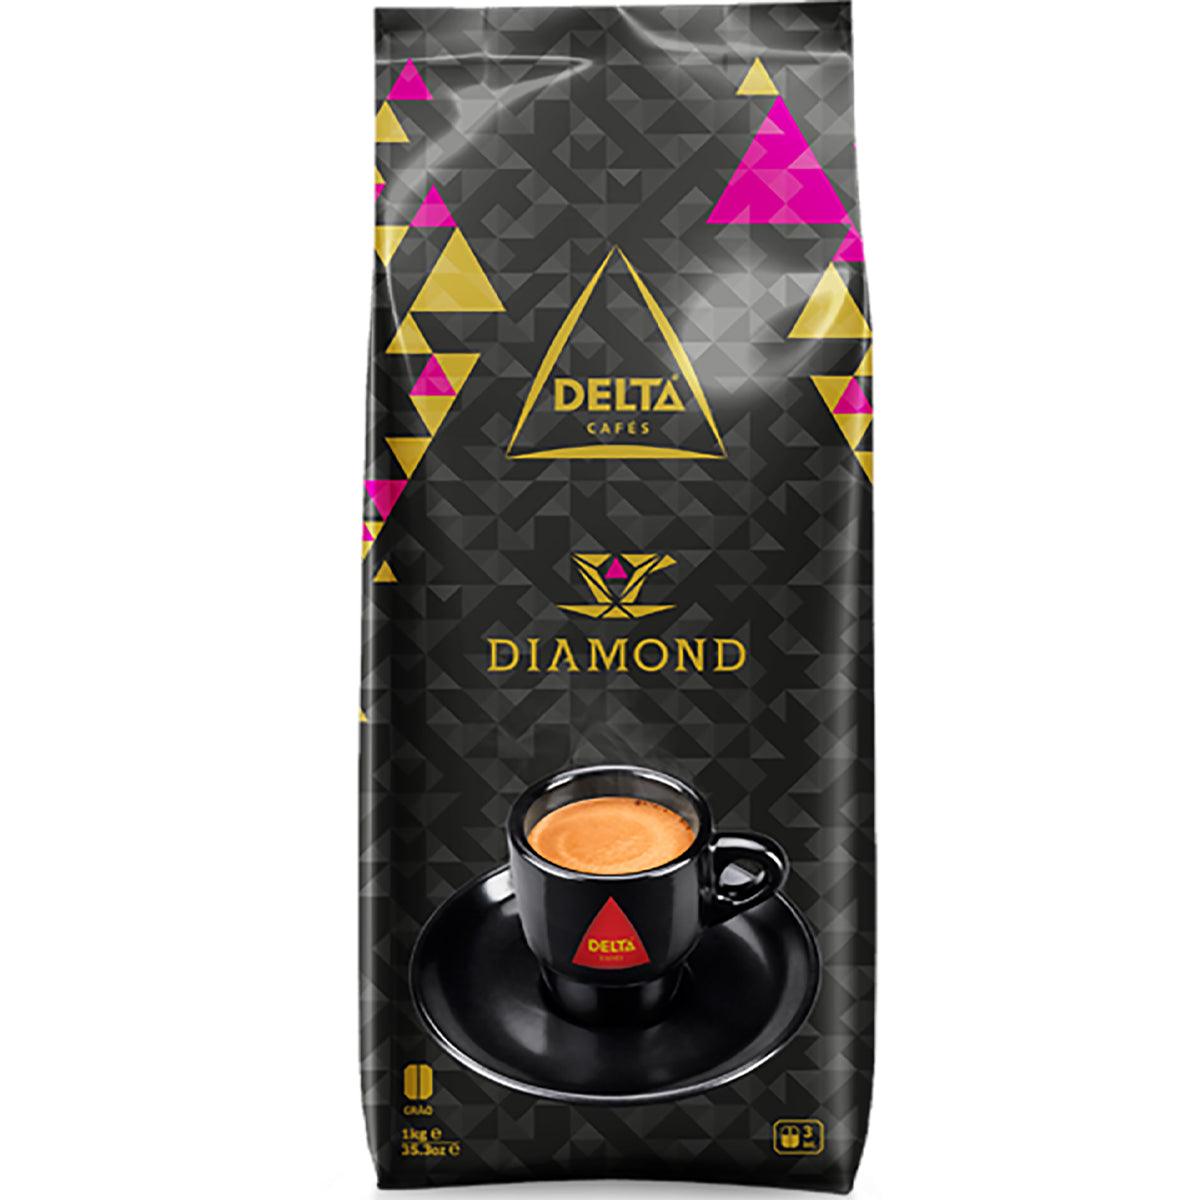 Delta Cafe Diamond 1kg